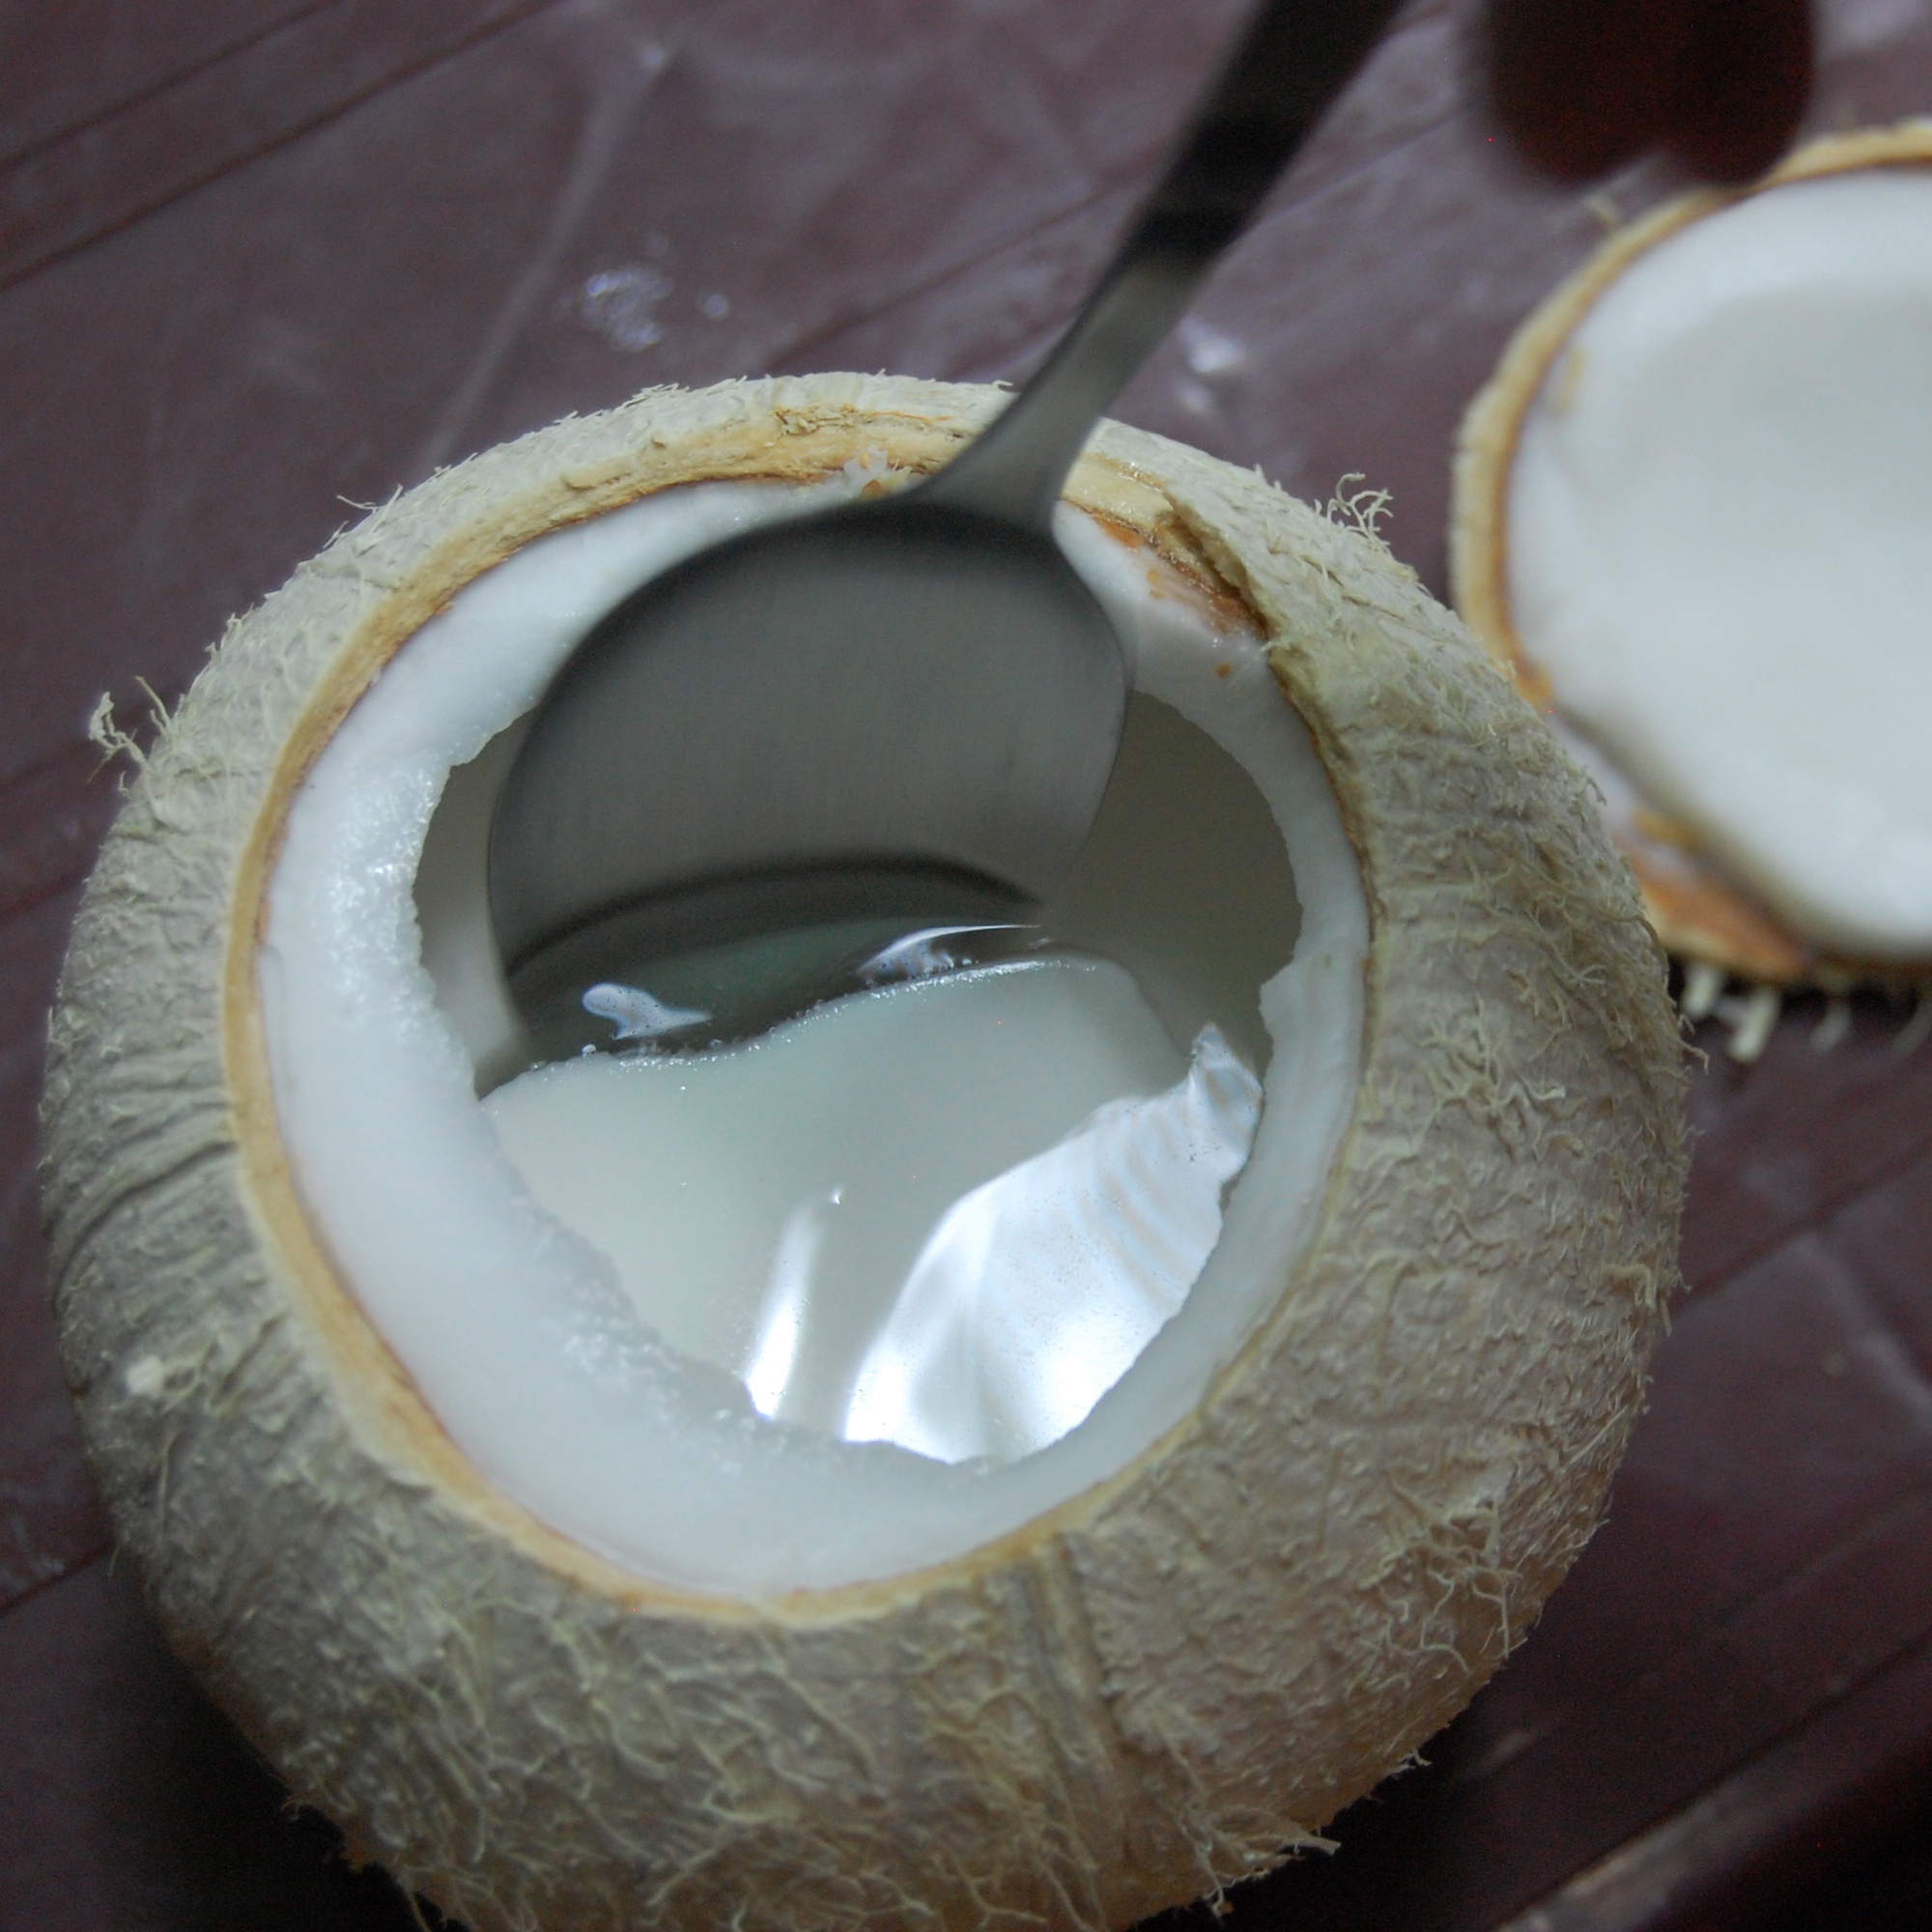 кокосы во вьетнаме